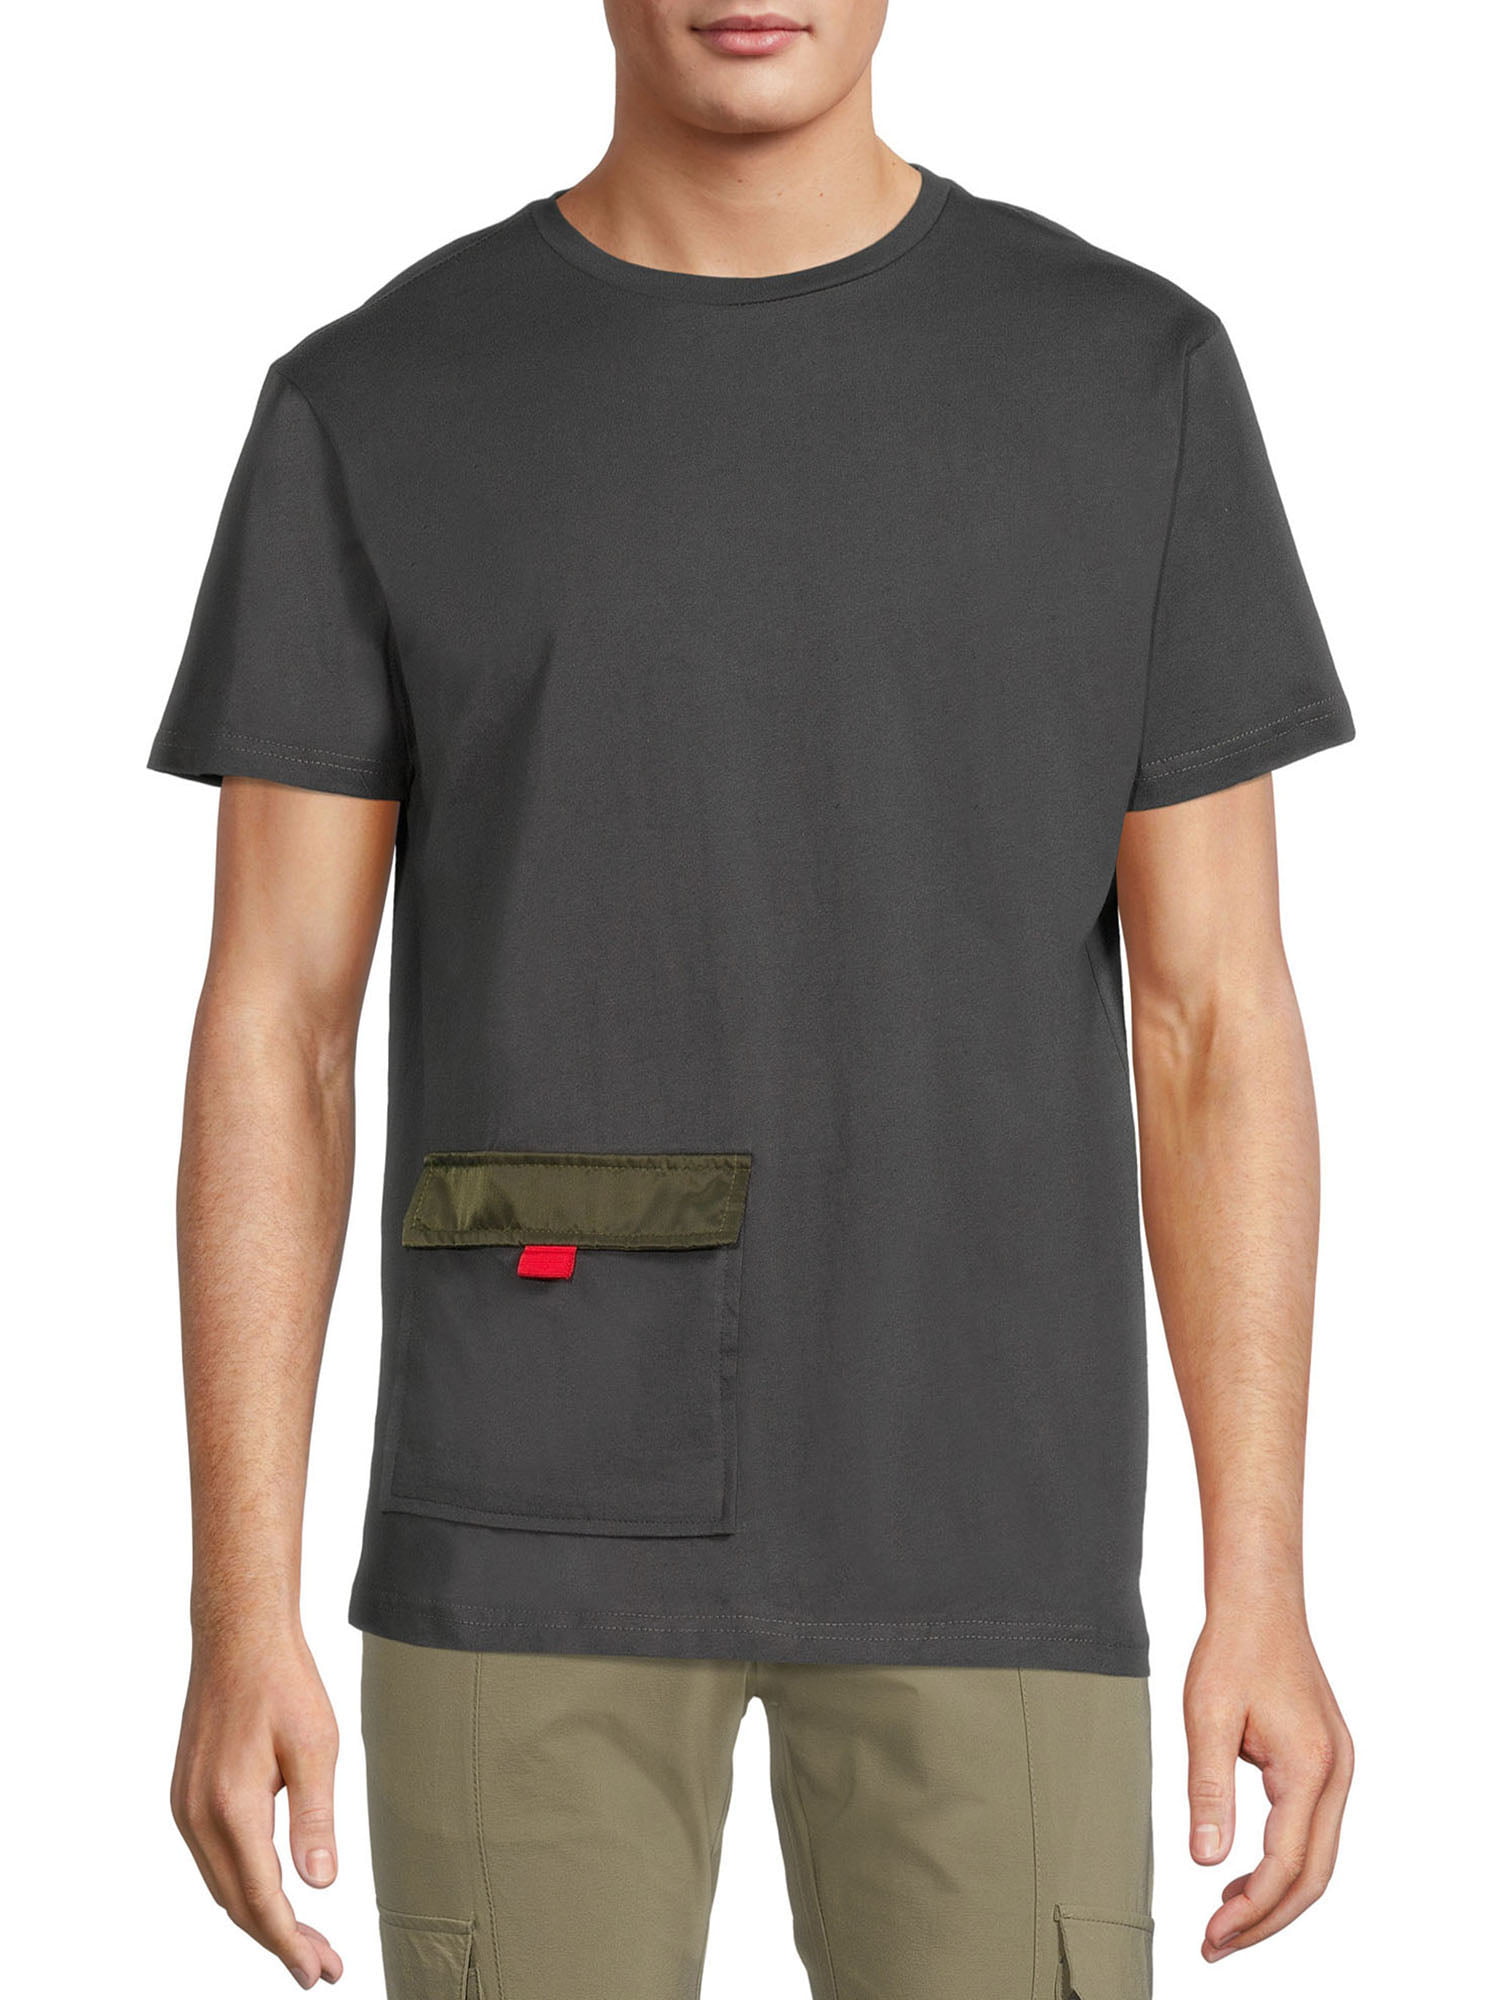 American Stitch Men's Cotton Side Pocket T-Shirt, Sizes S-2XL